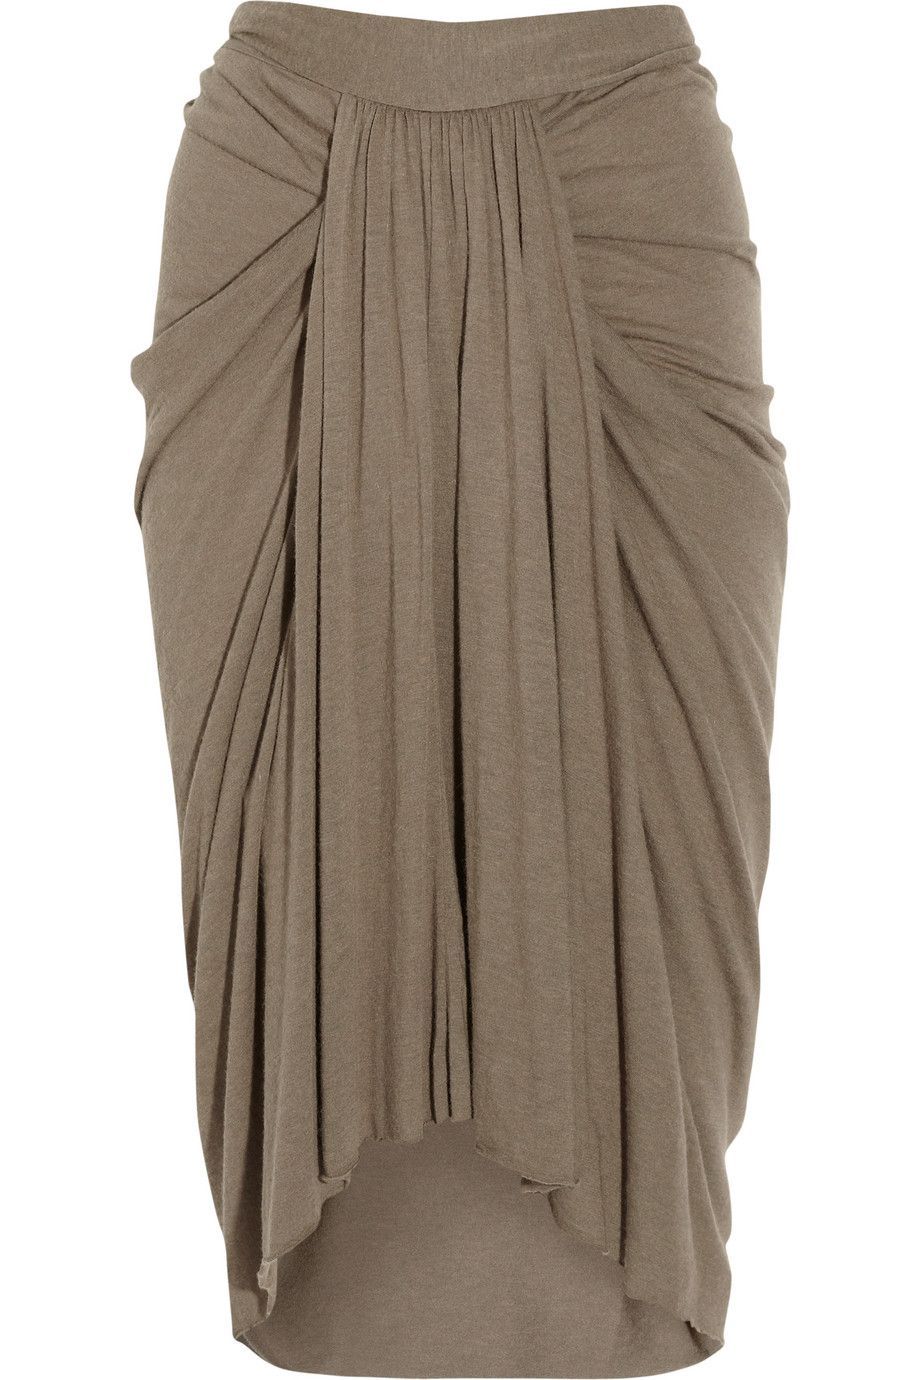 Rick Owens Lilies - Draped jersey skirt - Rick Owens Lilies - Draped jersey skirt -   13 egyptian style Dress ideas